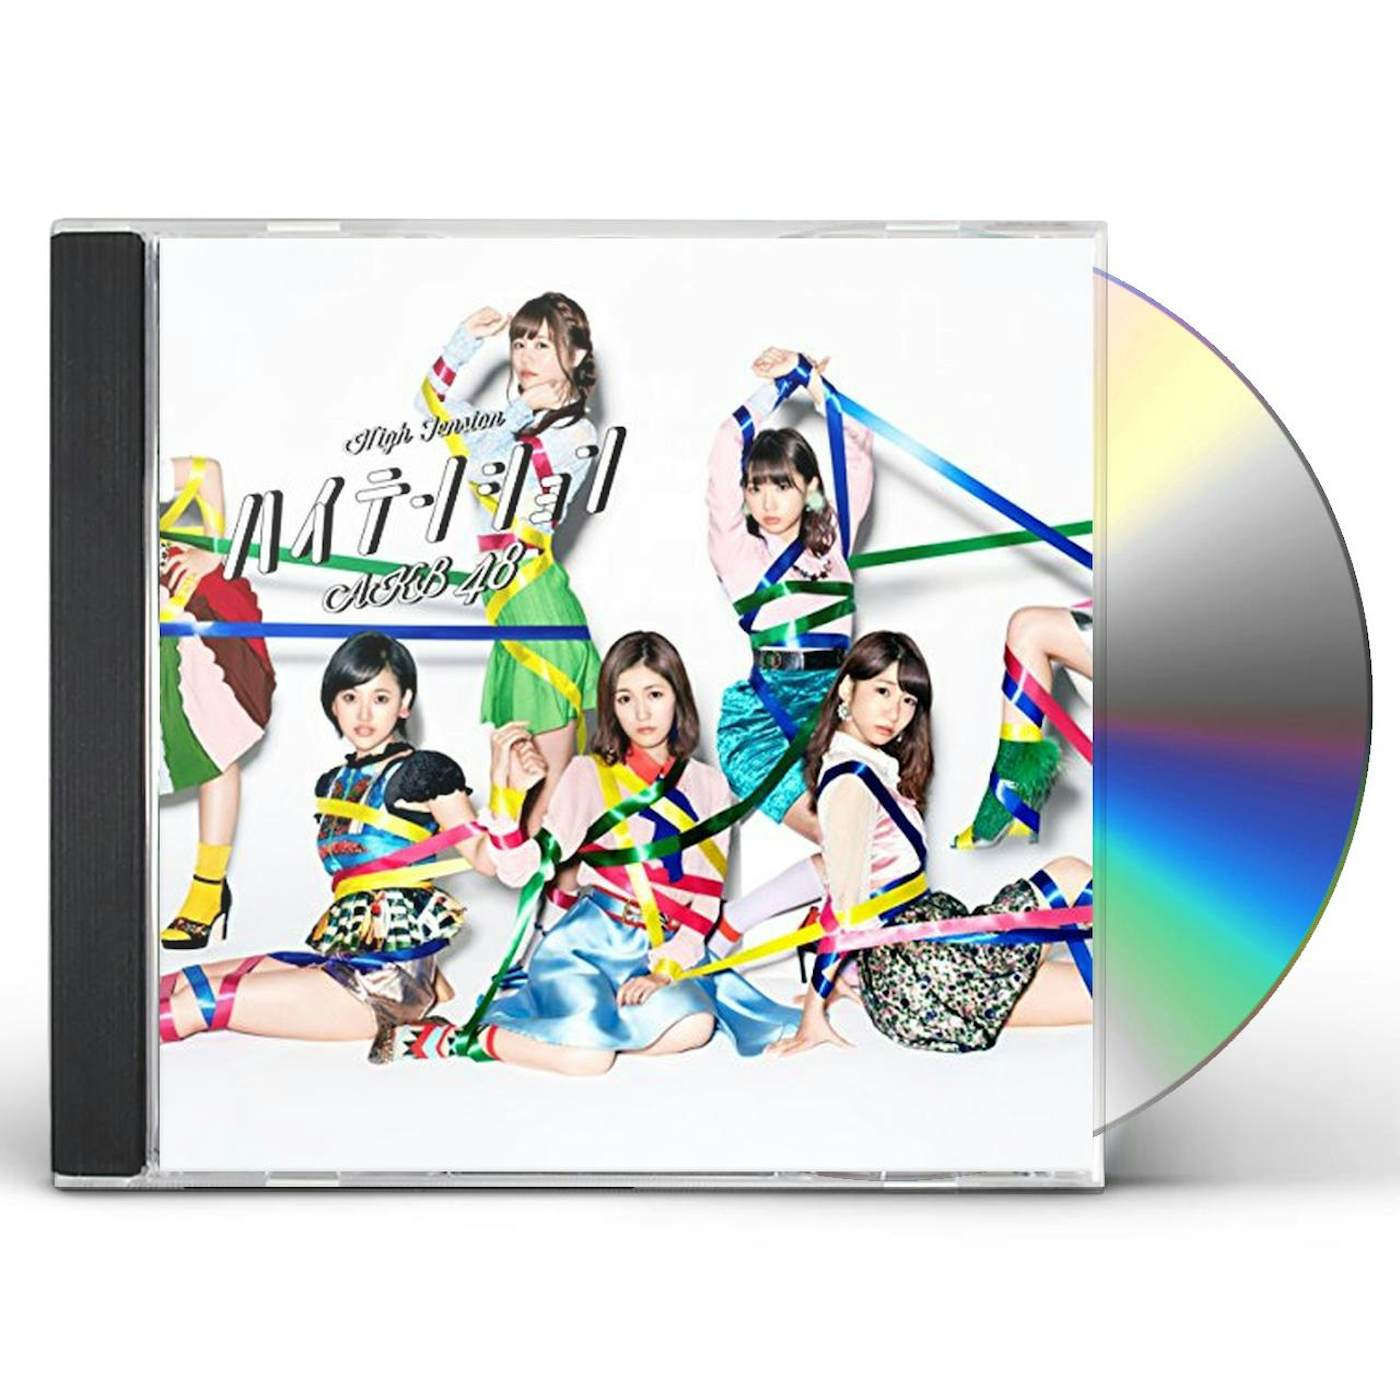 AKB48 HIGH TENSION: TYPE-III CD